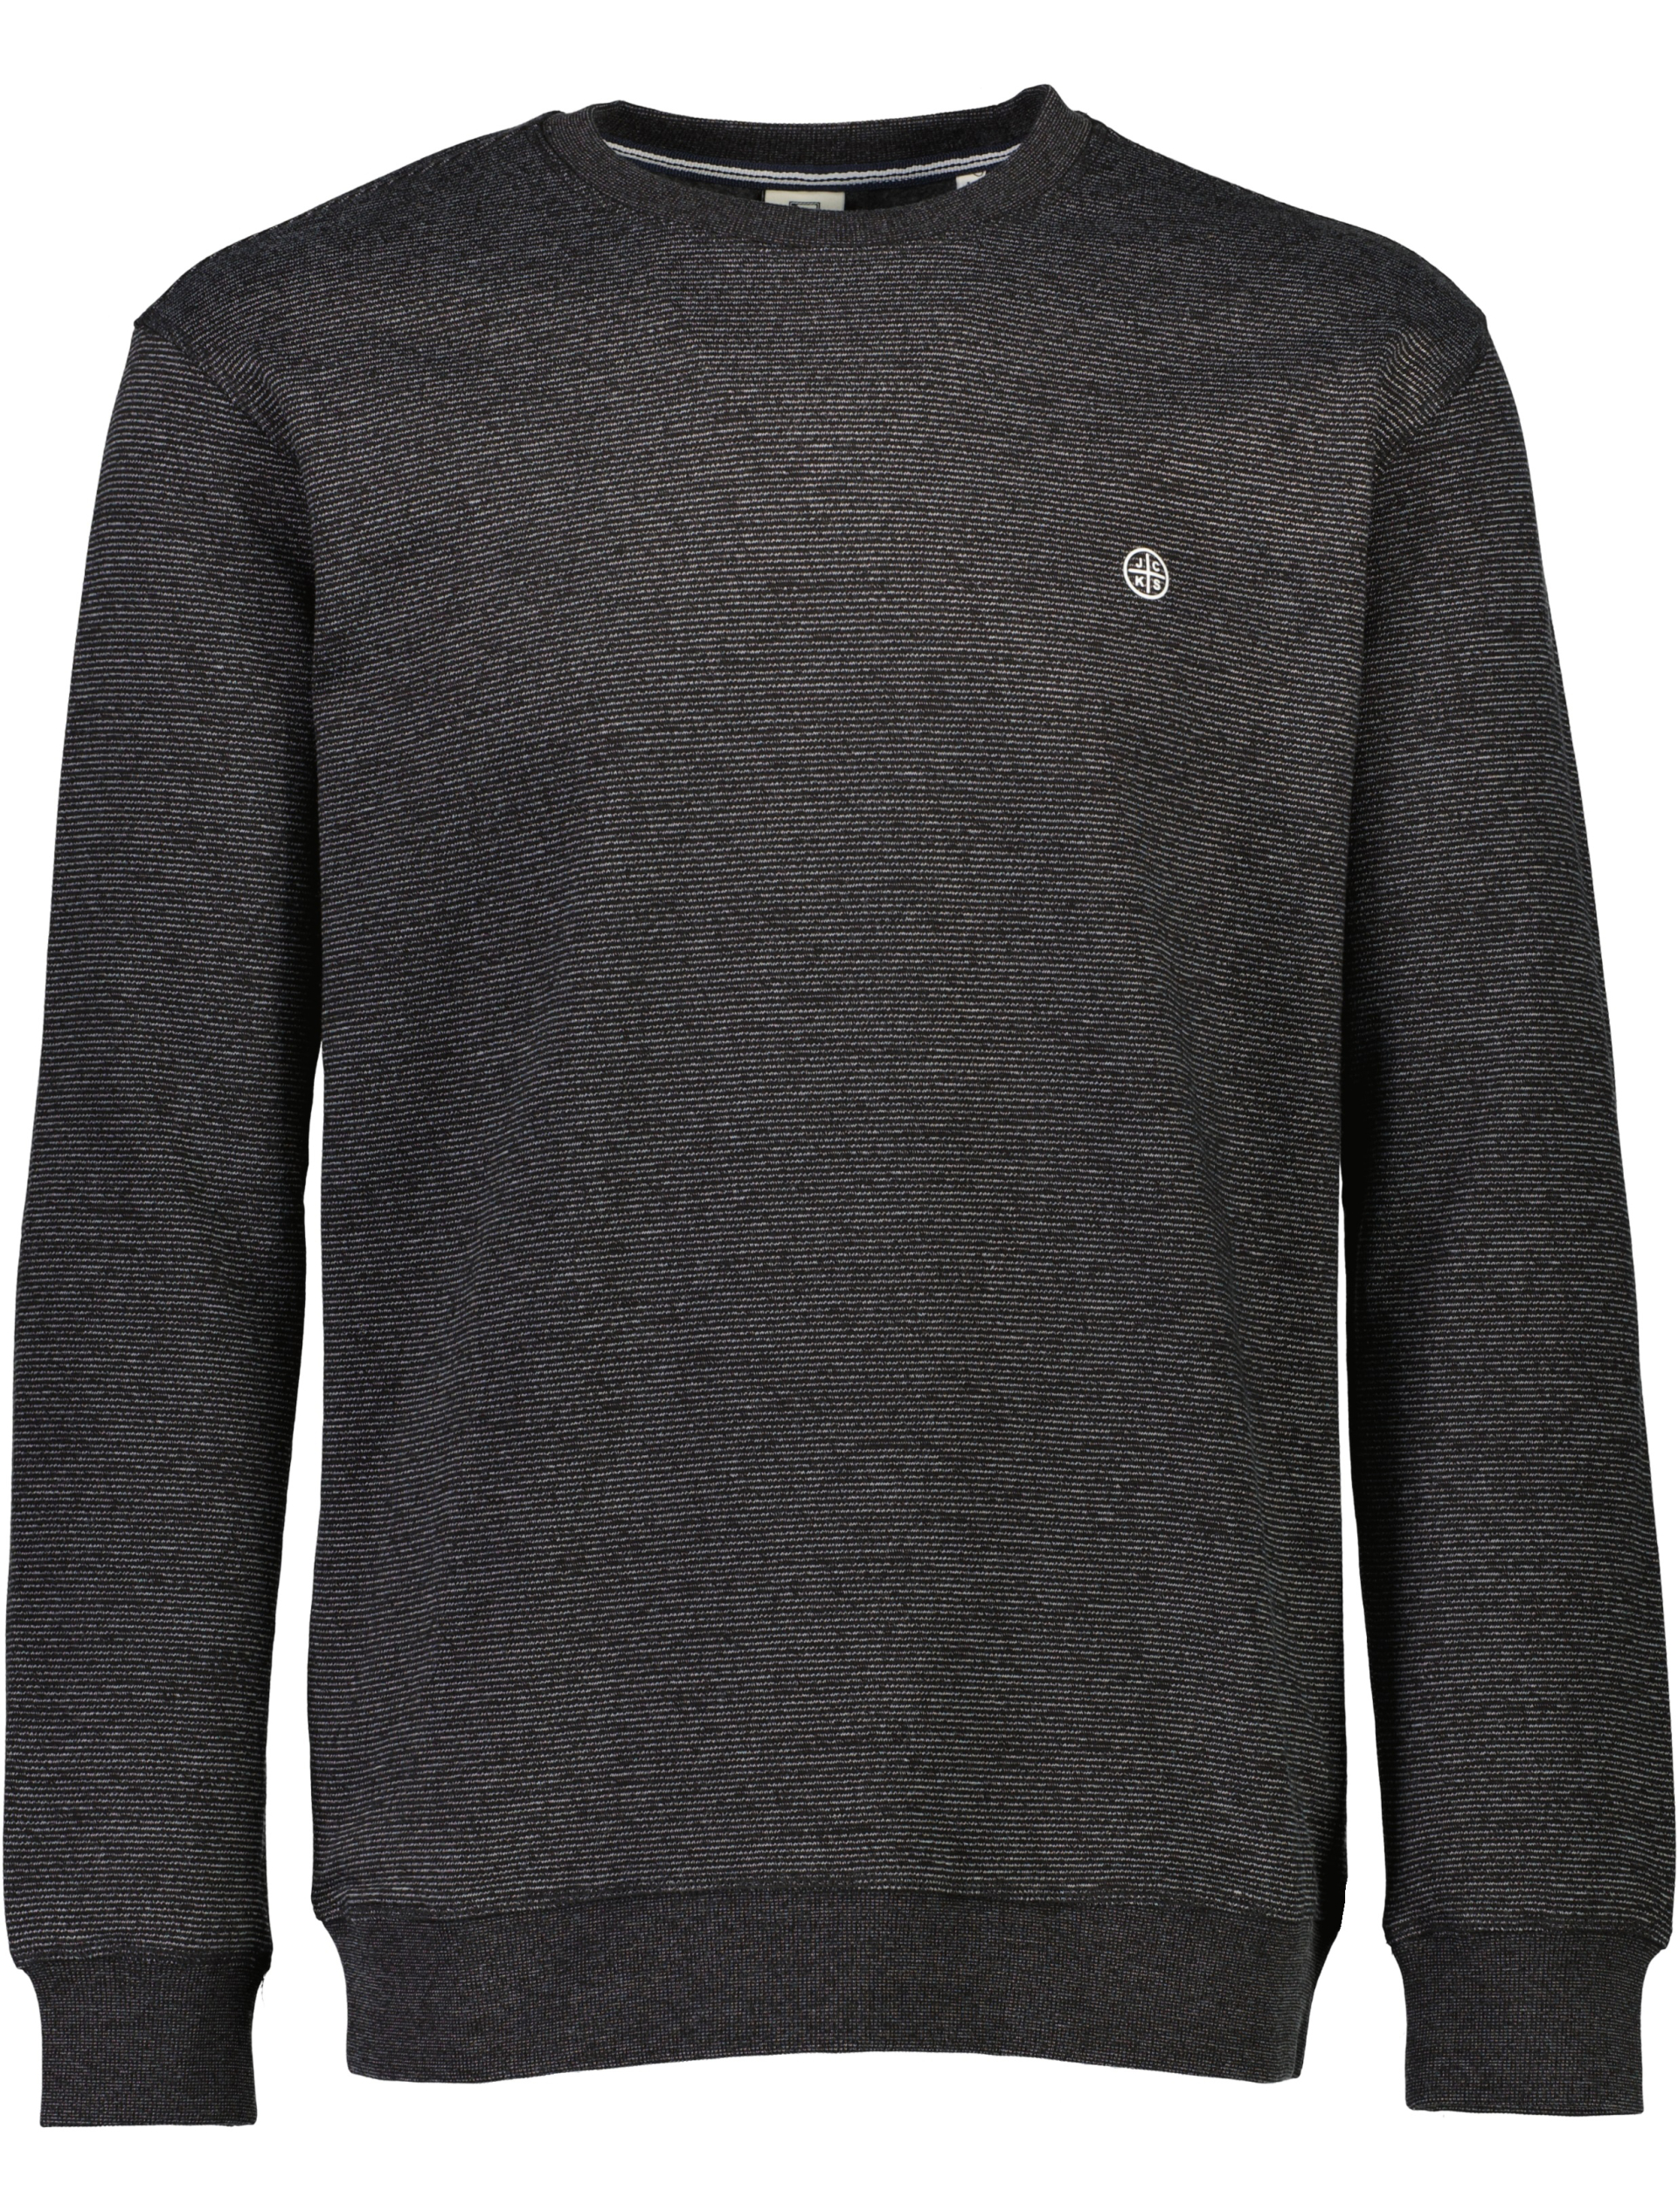 Jack's Sweatshirt svart / black